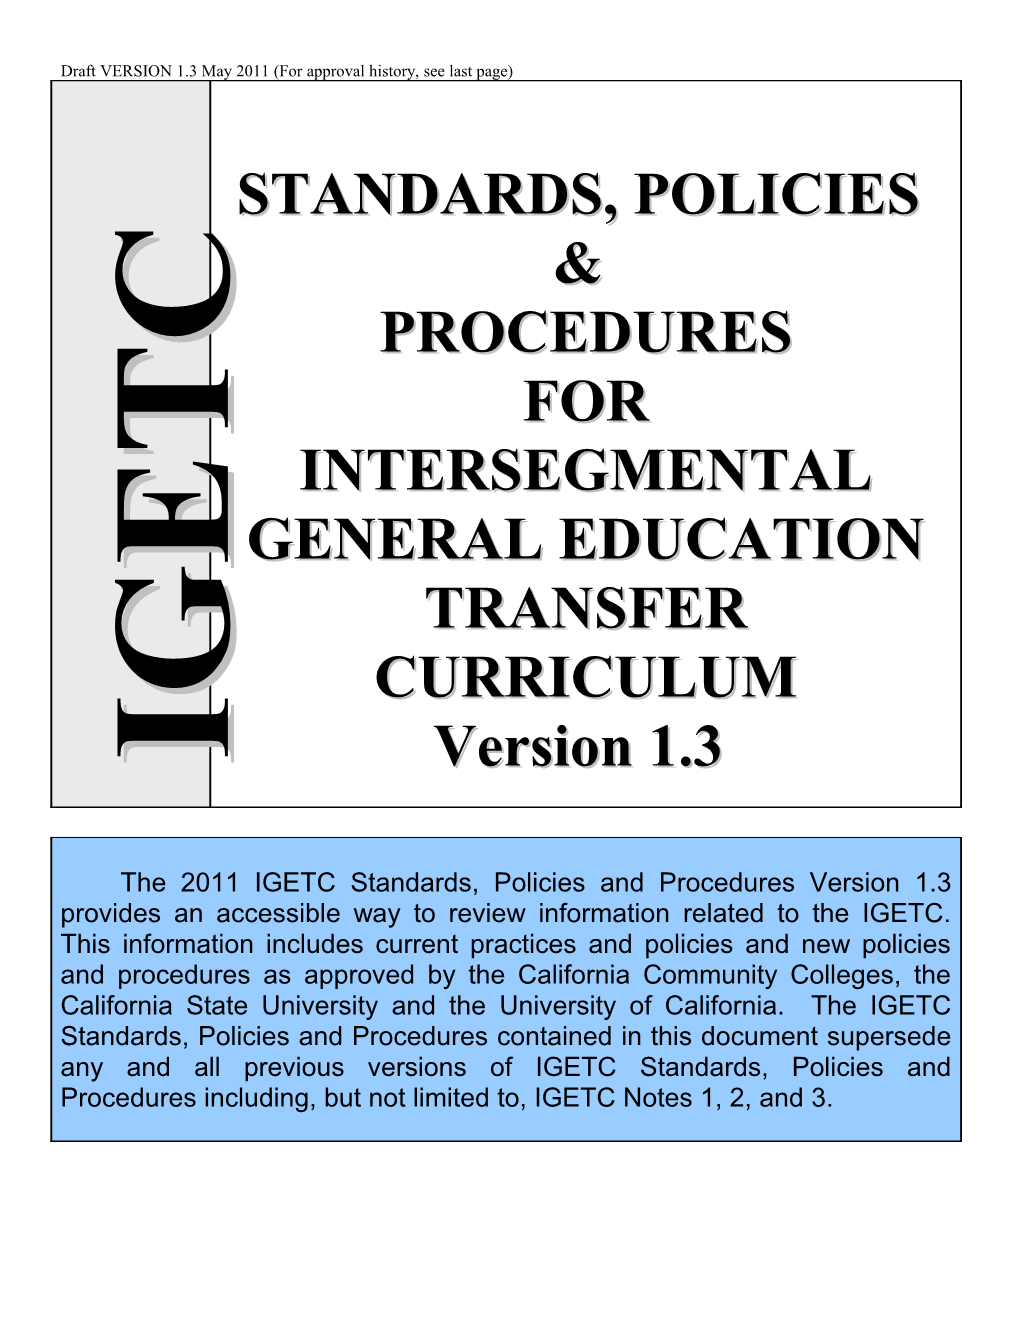 INTERSEGMENTAL GENERAL EDUCATION TRANSFER CURRICULUM Revised 2007